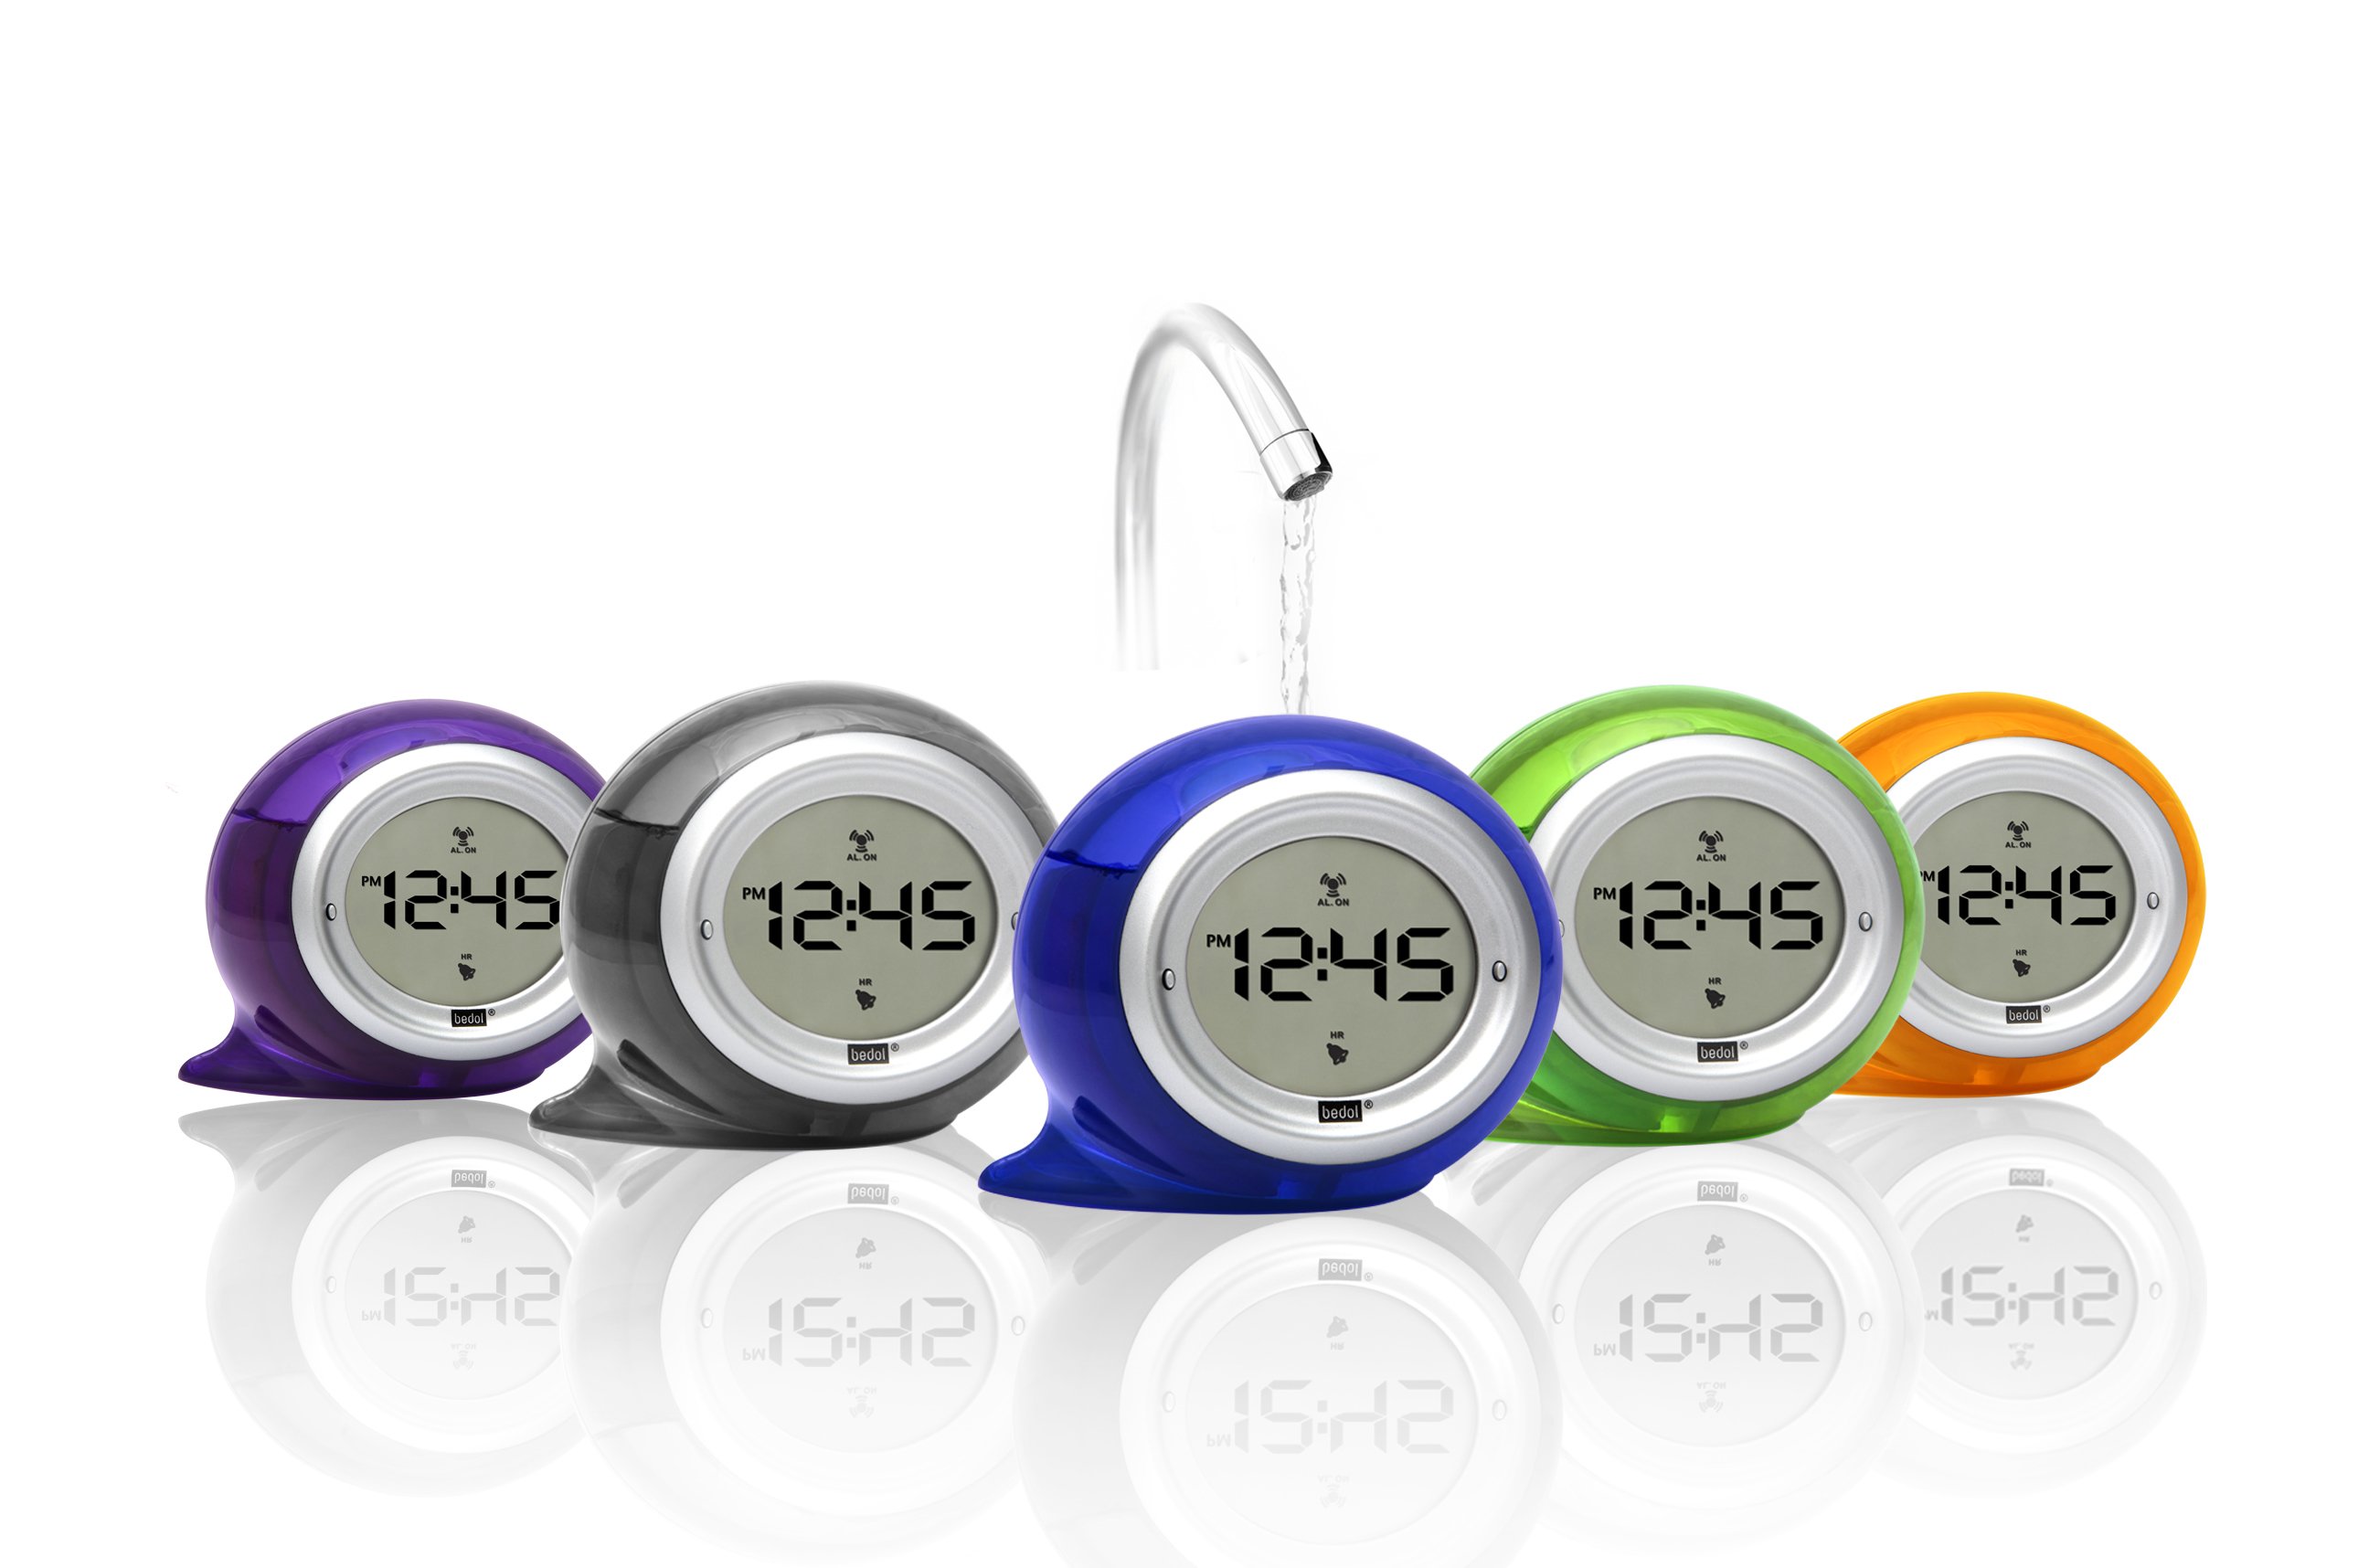 The new Bedol Water Alarm Clock. Source: Bedol